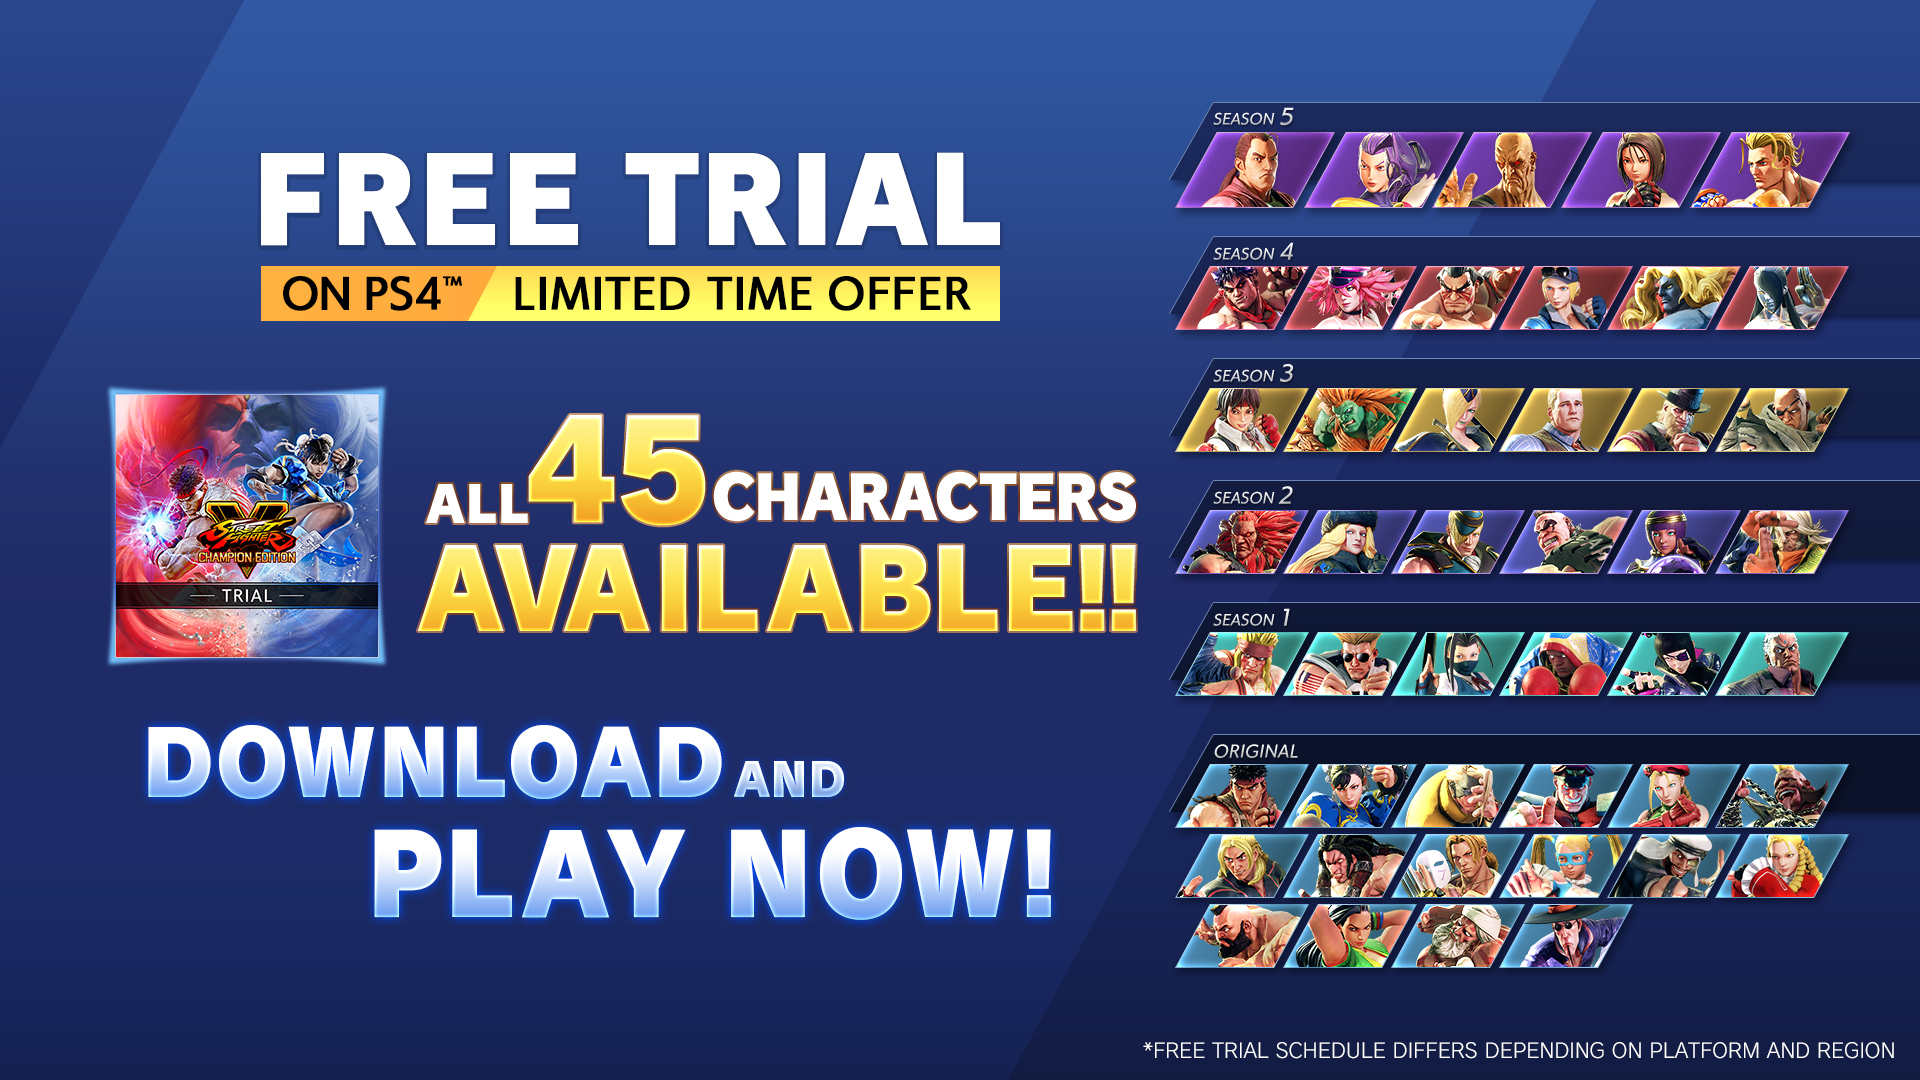 Street Fighter V Champion Edition (PS4 / PlayStation 4) BRAND NEW